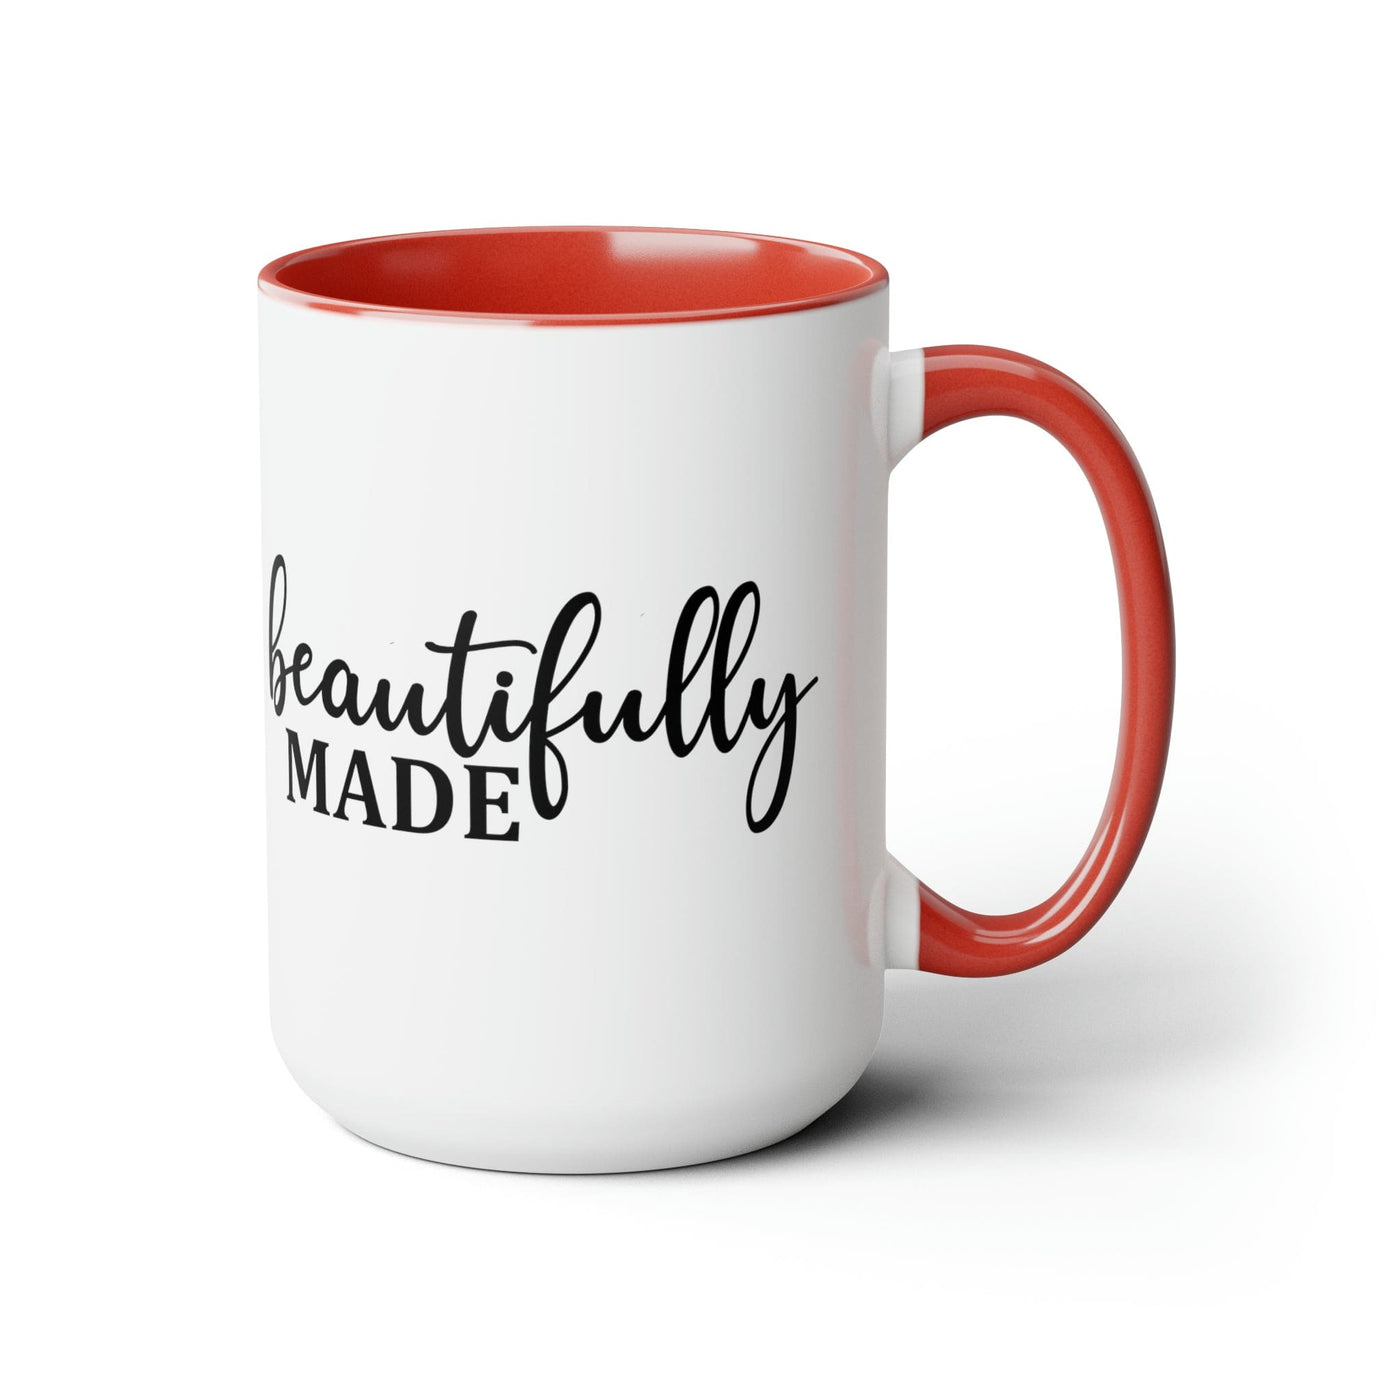 Accent Ceramic Coffee Mug 15oz - Beautifully Made - Inspiration Affirmation